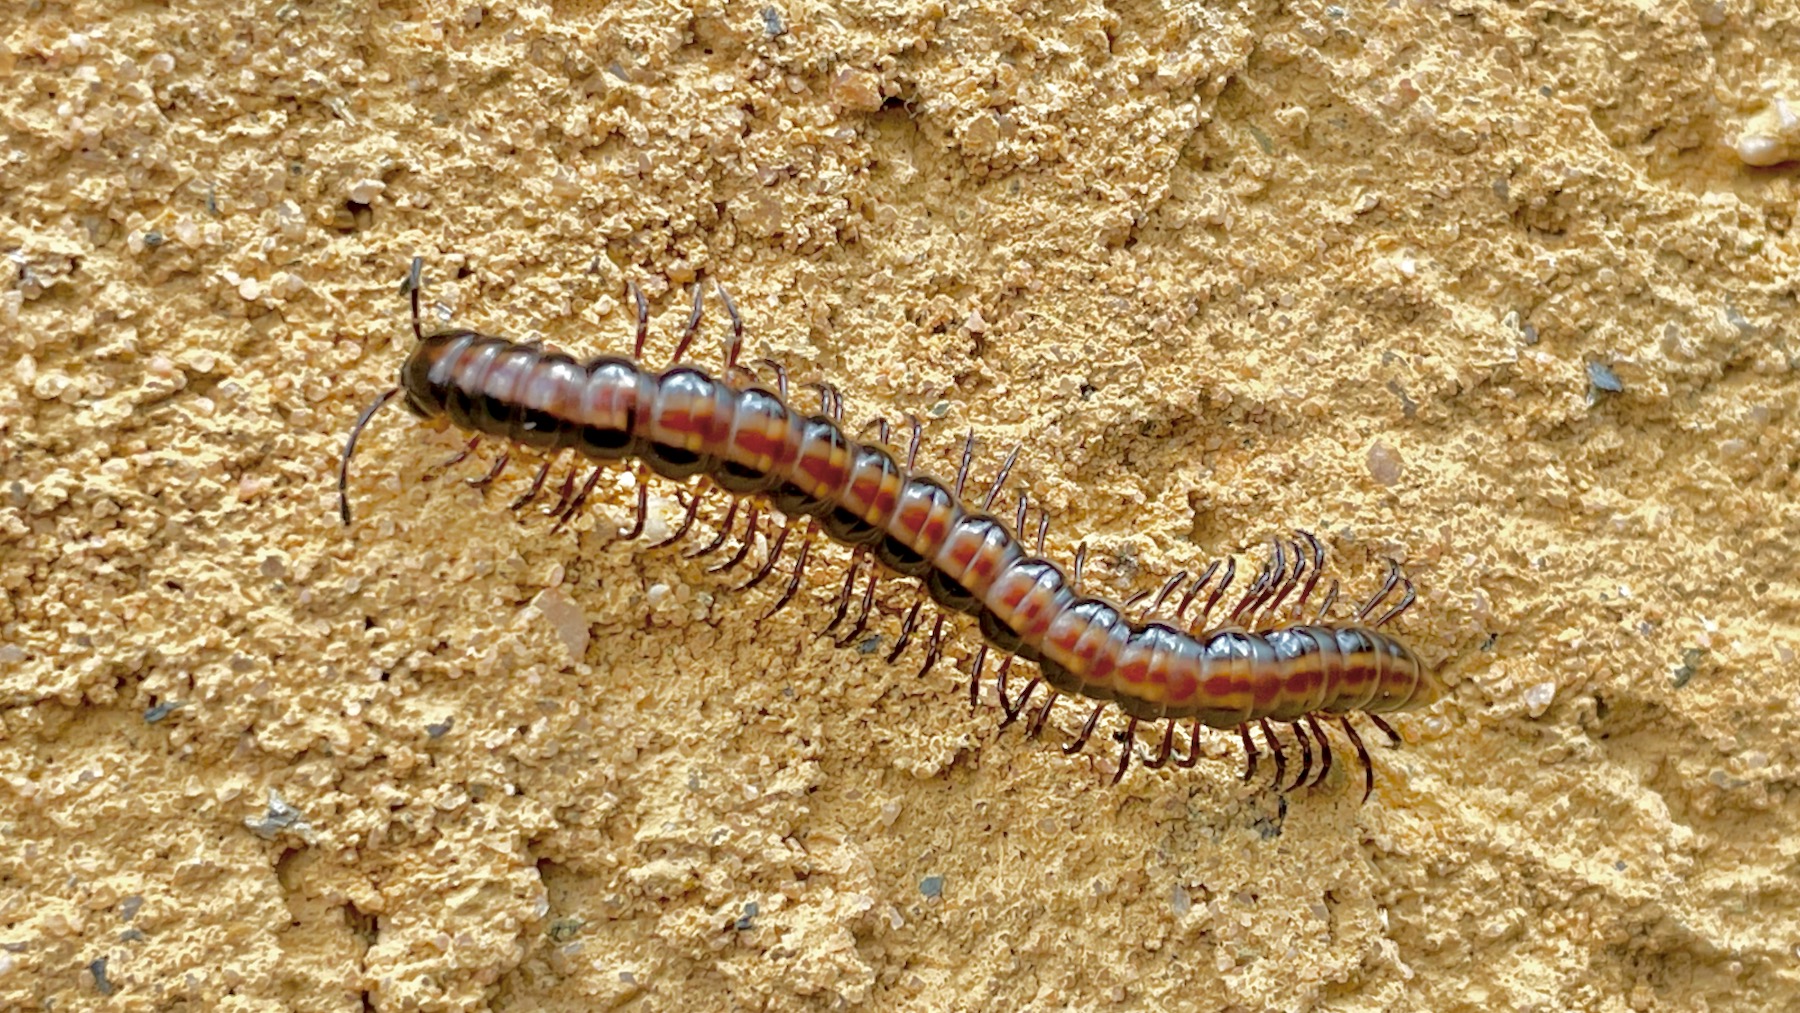 Polydesmidae